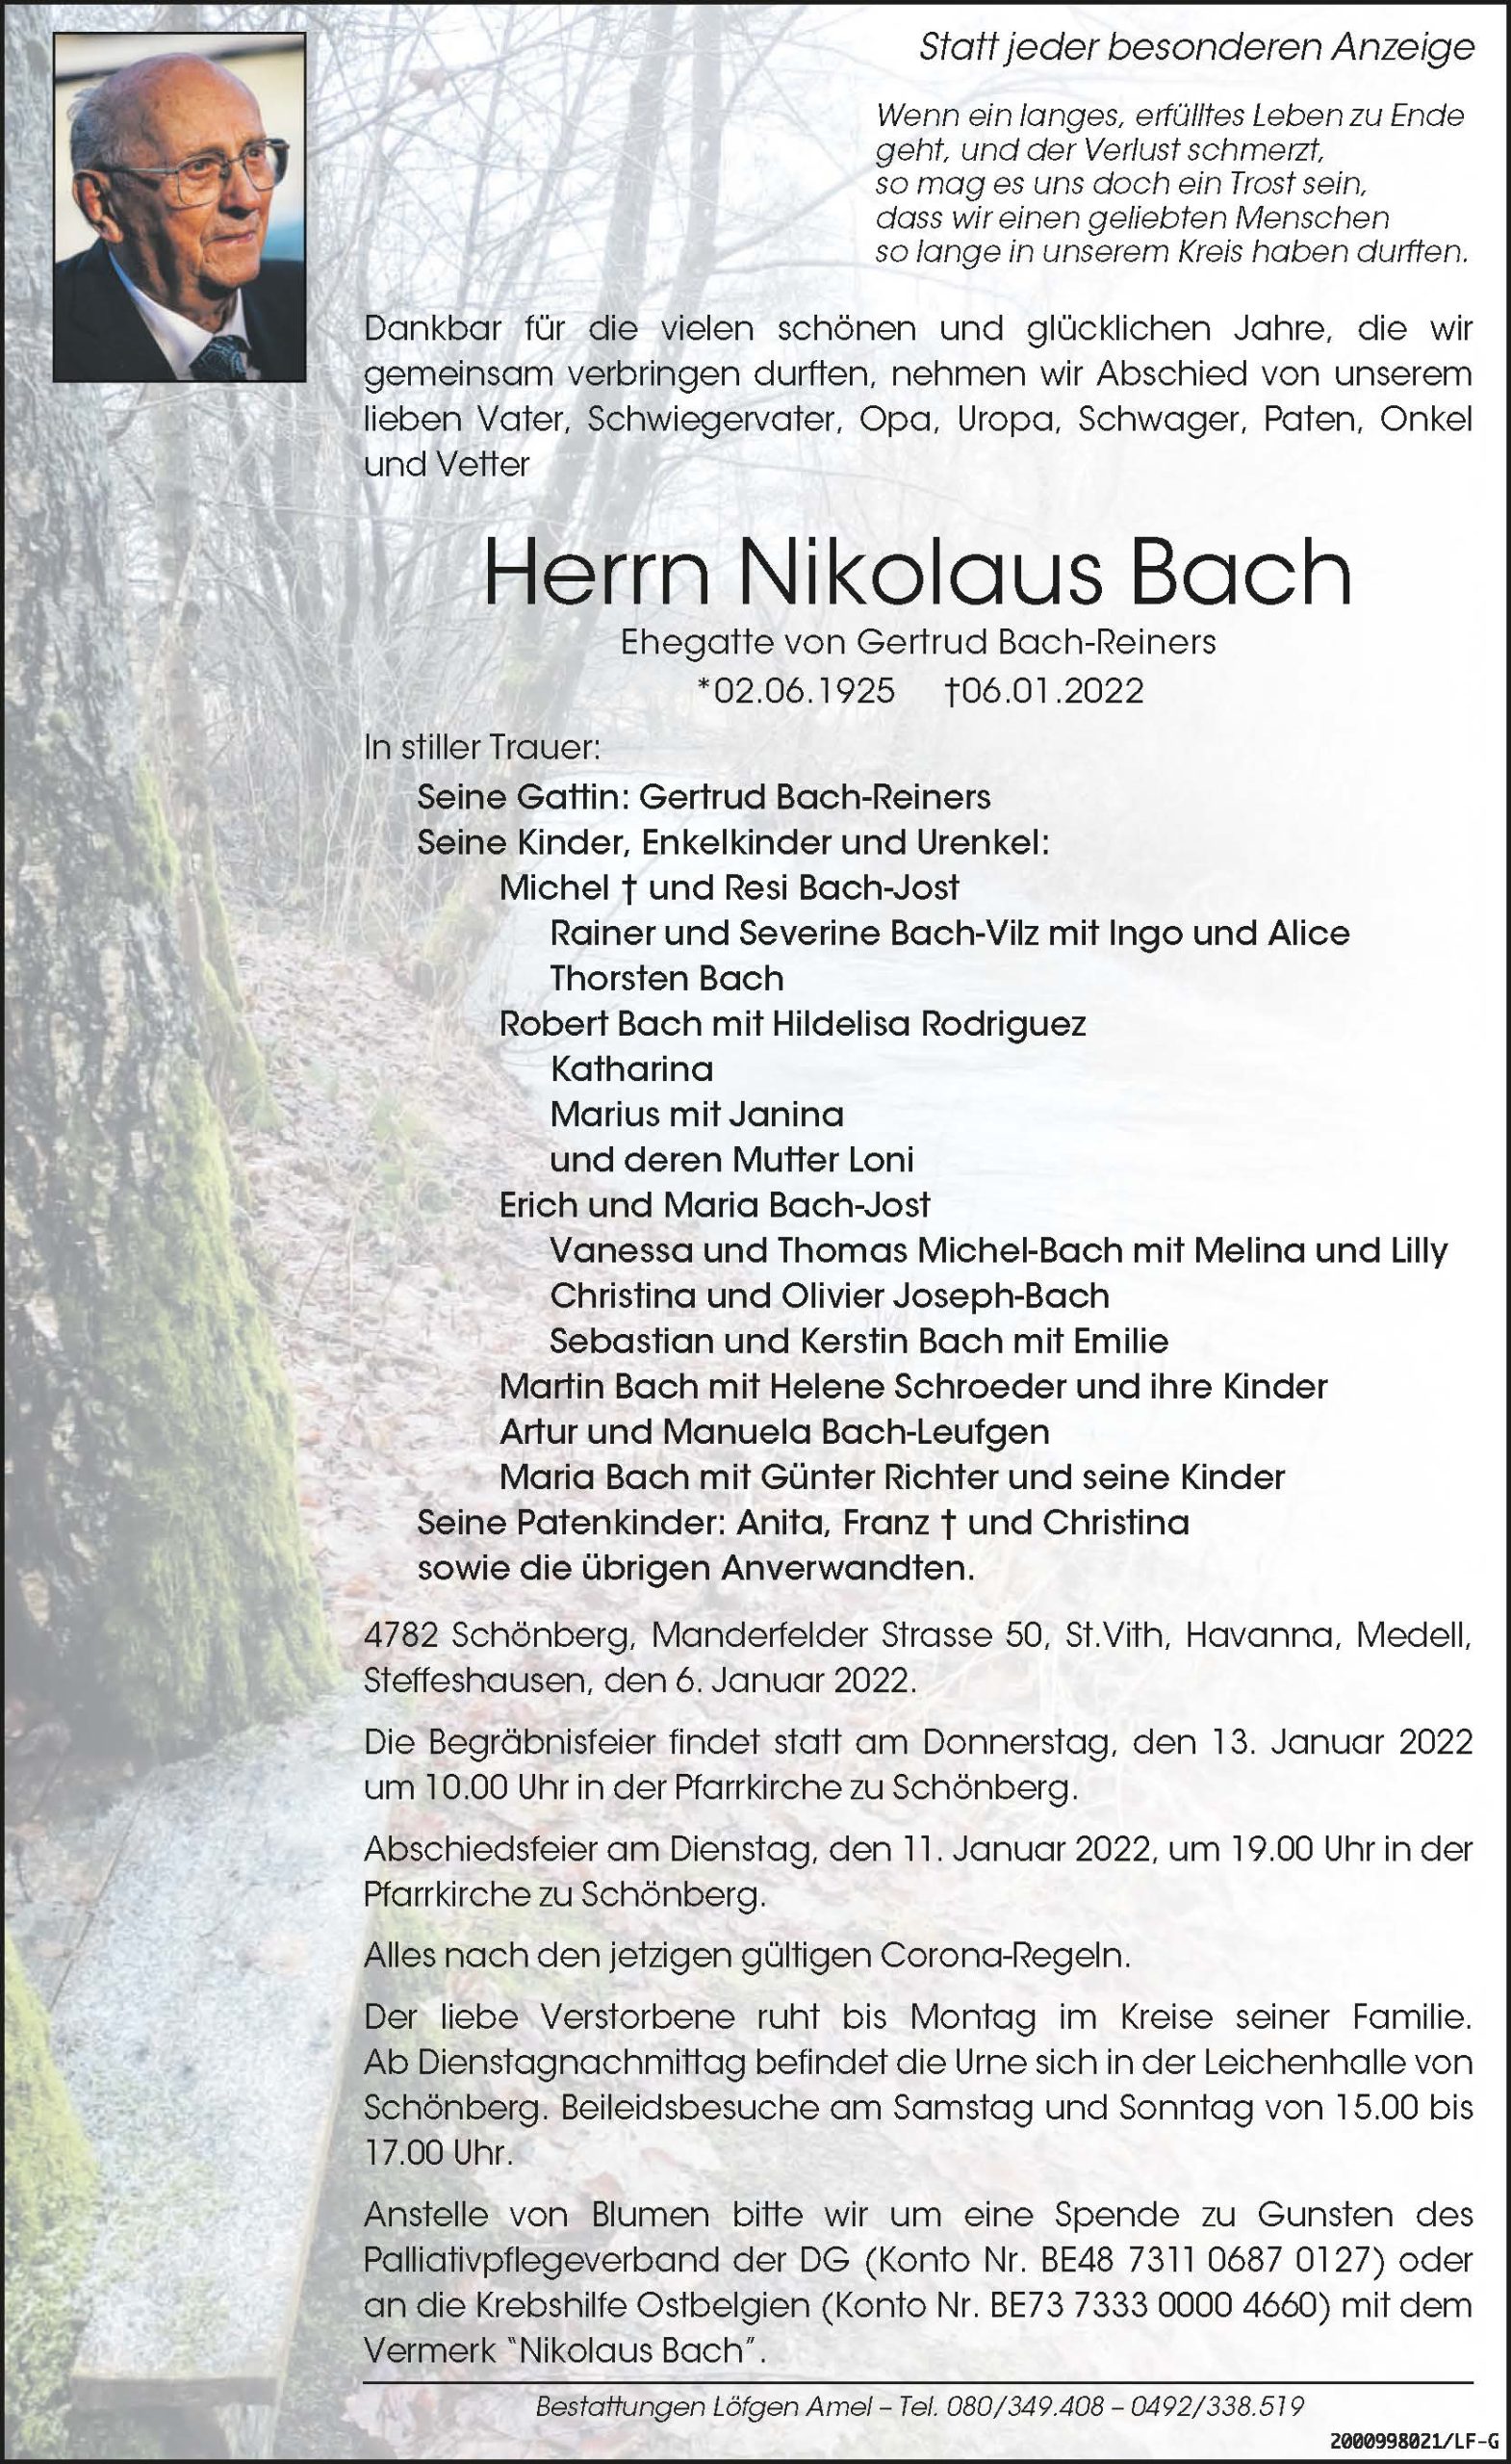 Nikolaus Bach